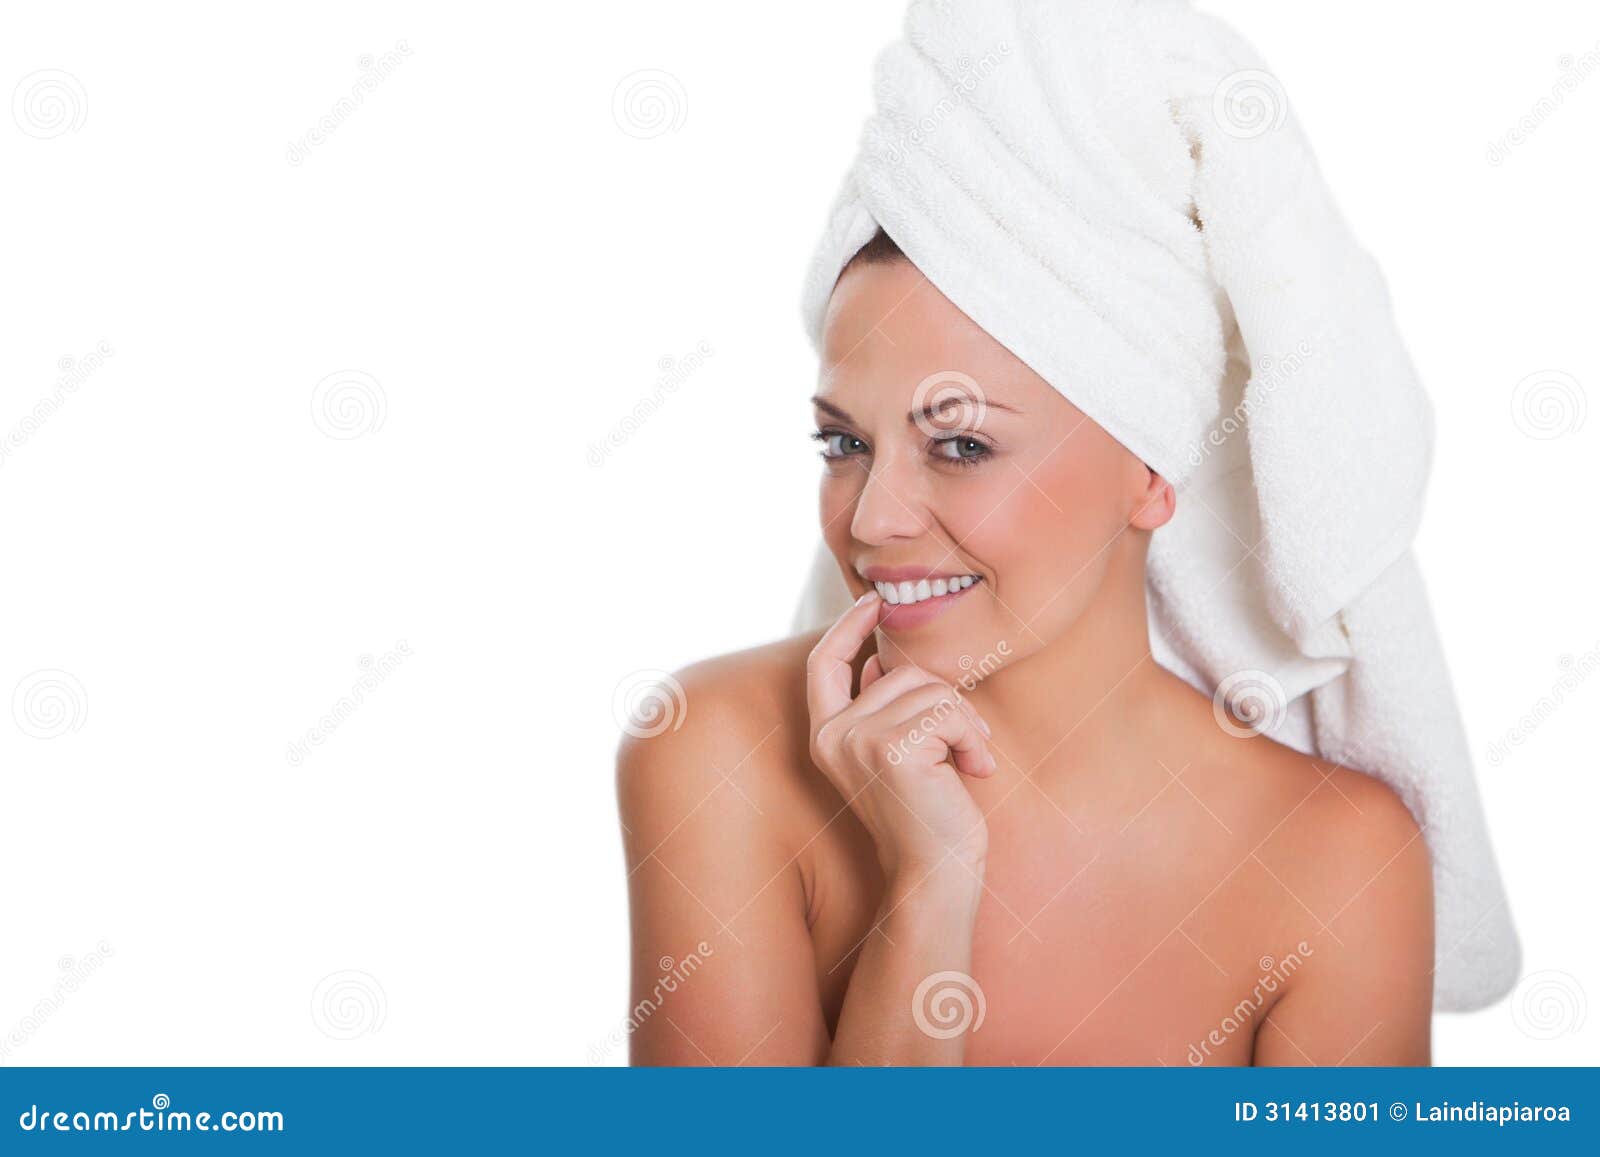 https://thumbs.dreamstime.com/z/woman-towel-head-white-background-31413801.jpg